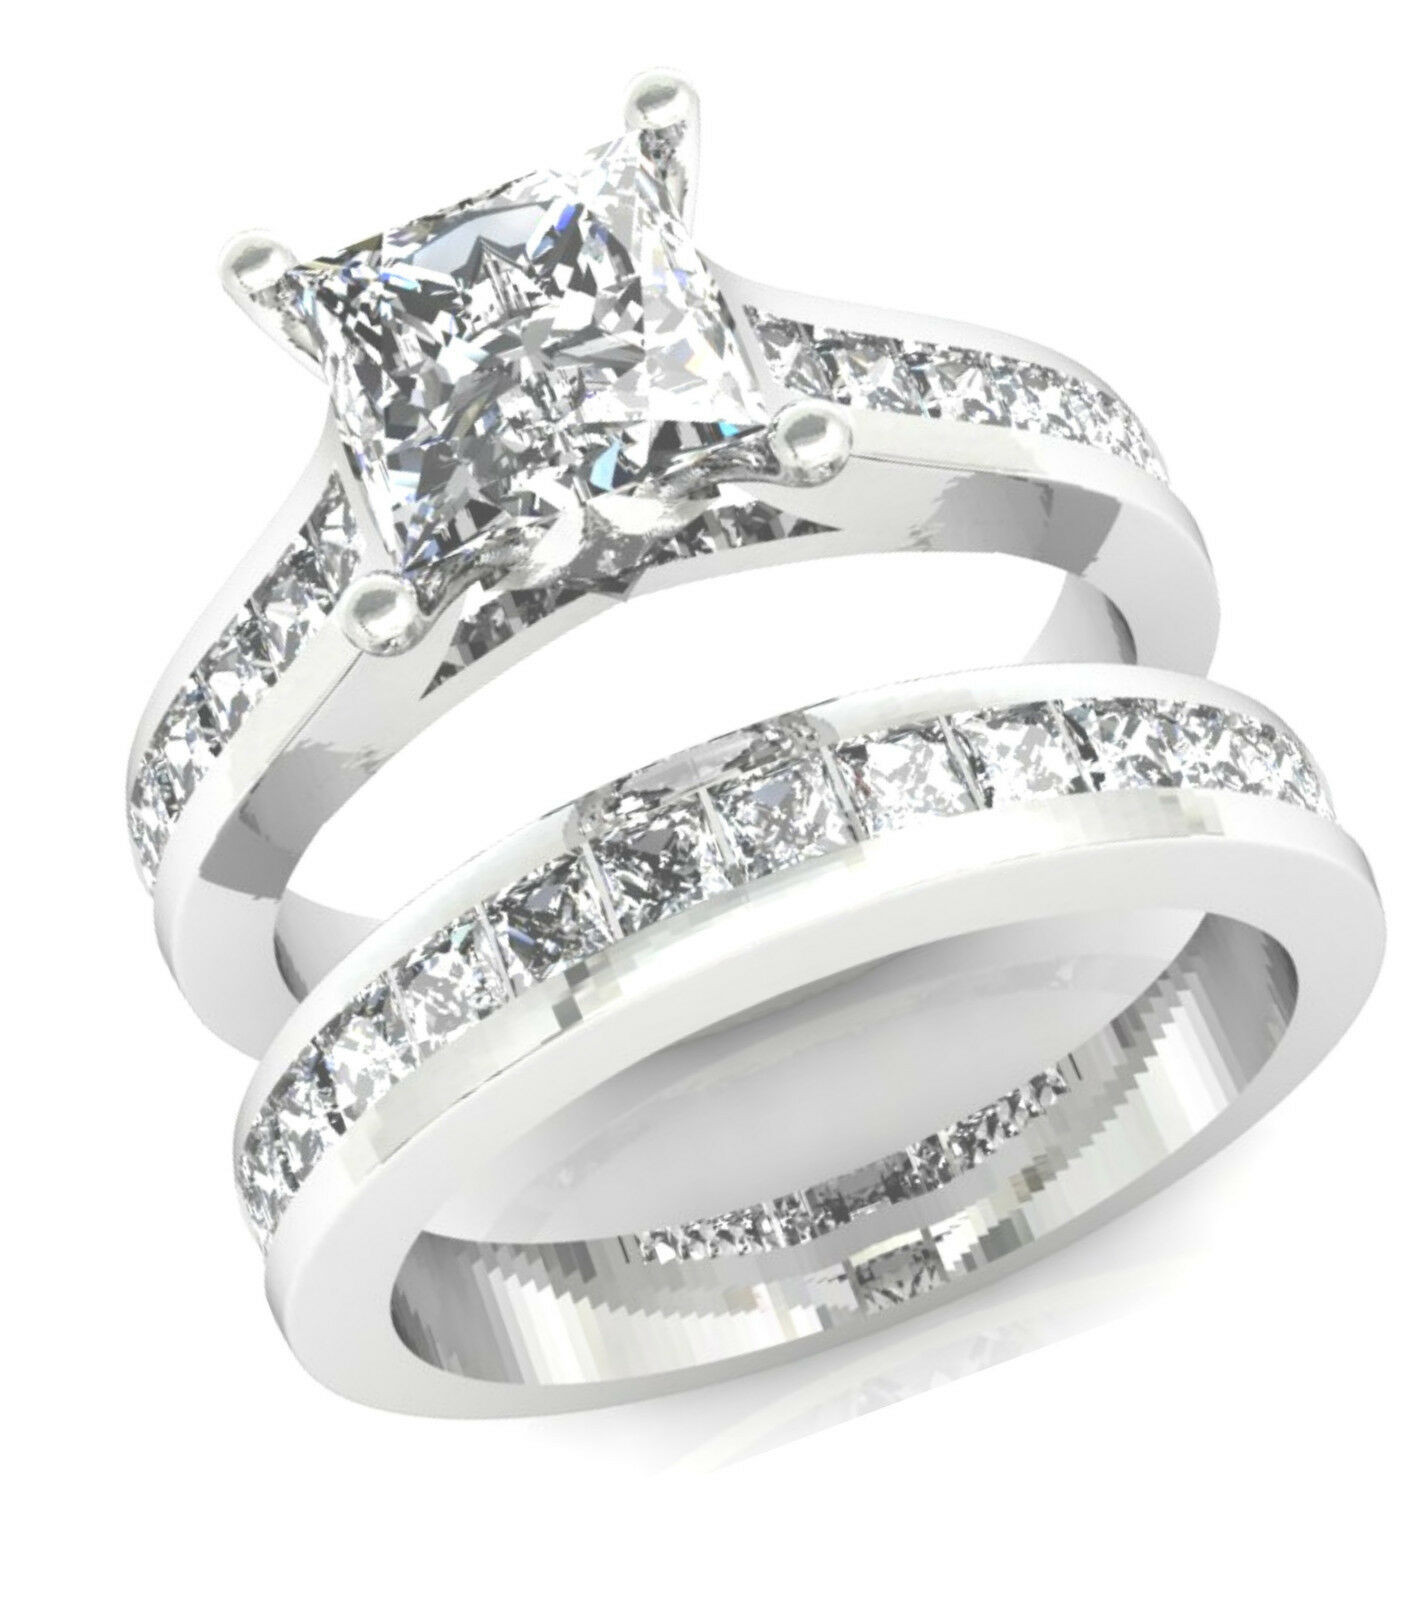 Princess Cut Diamond Wedding Sets
 3 2CT PRINCESS CUT CHANNEL SET ENGAGEMENT RING WEDDING